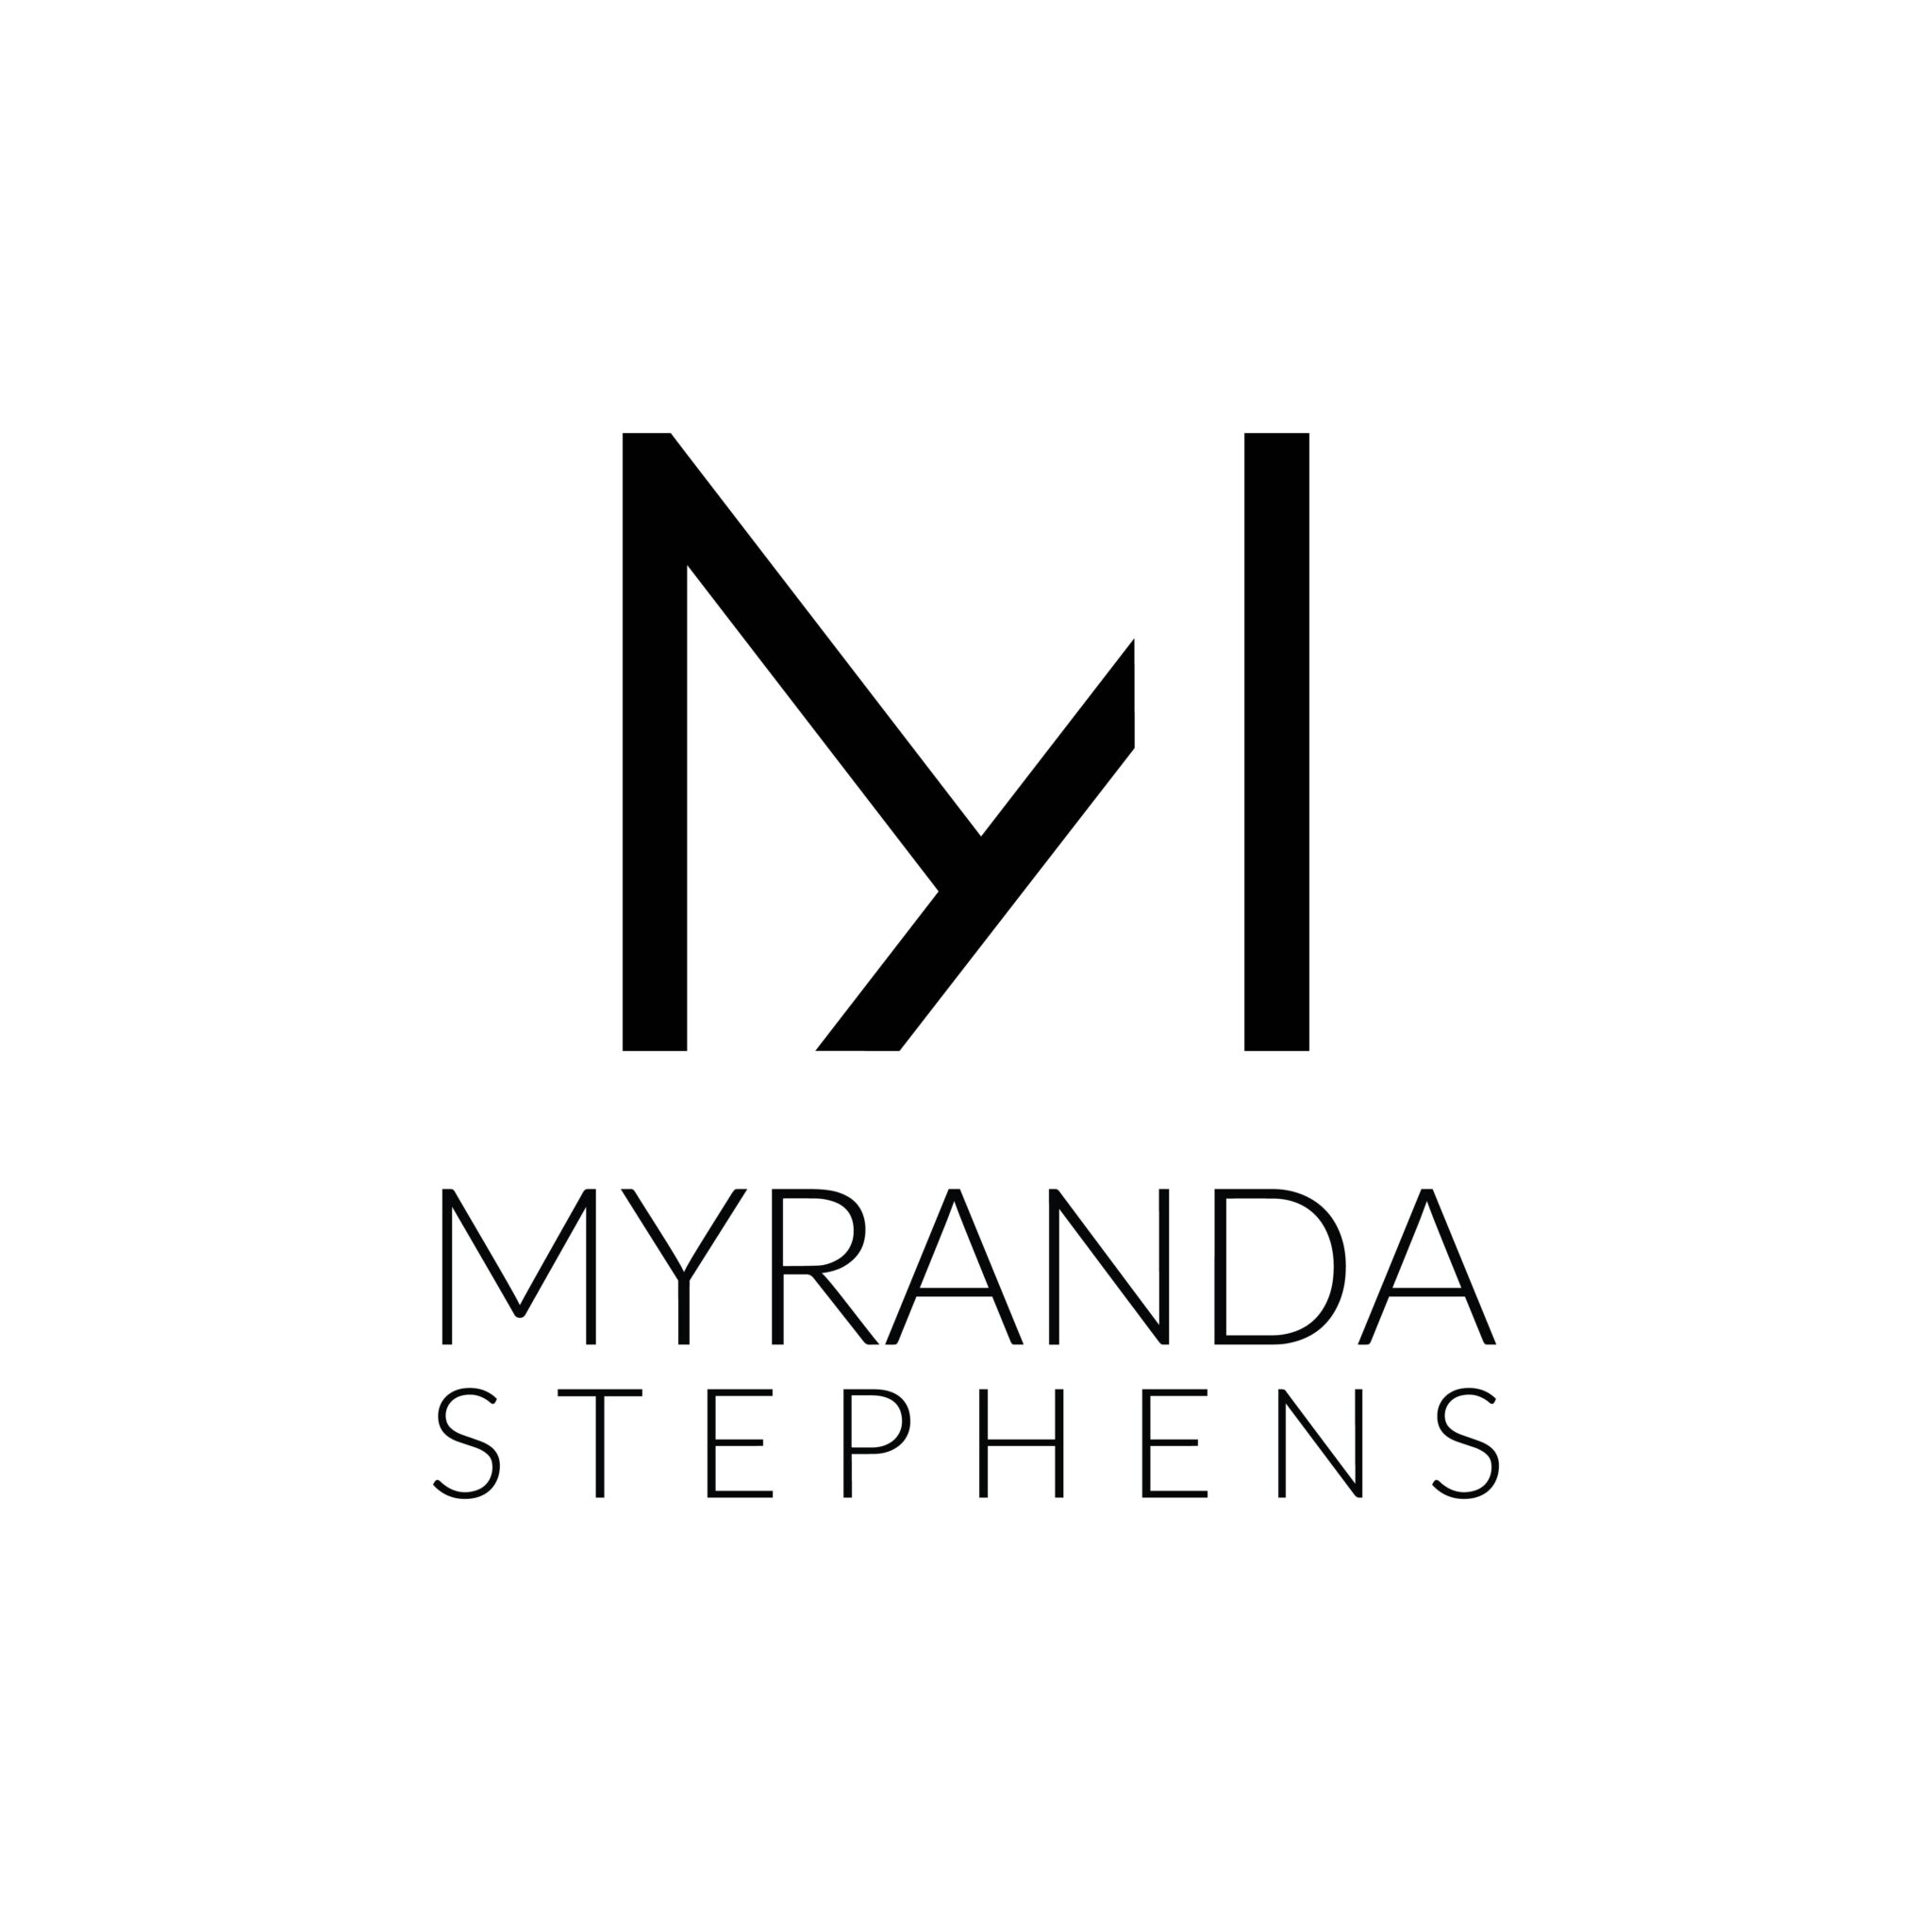 202301_Myranda-Stephens_Compassify-Logo_TM_Final_Logo-Lockup_Vertical_Black